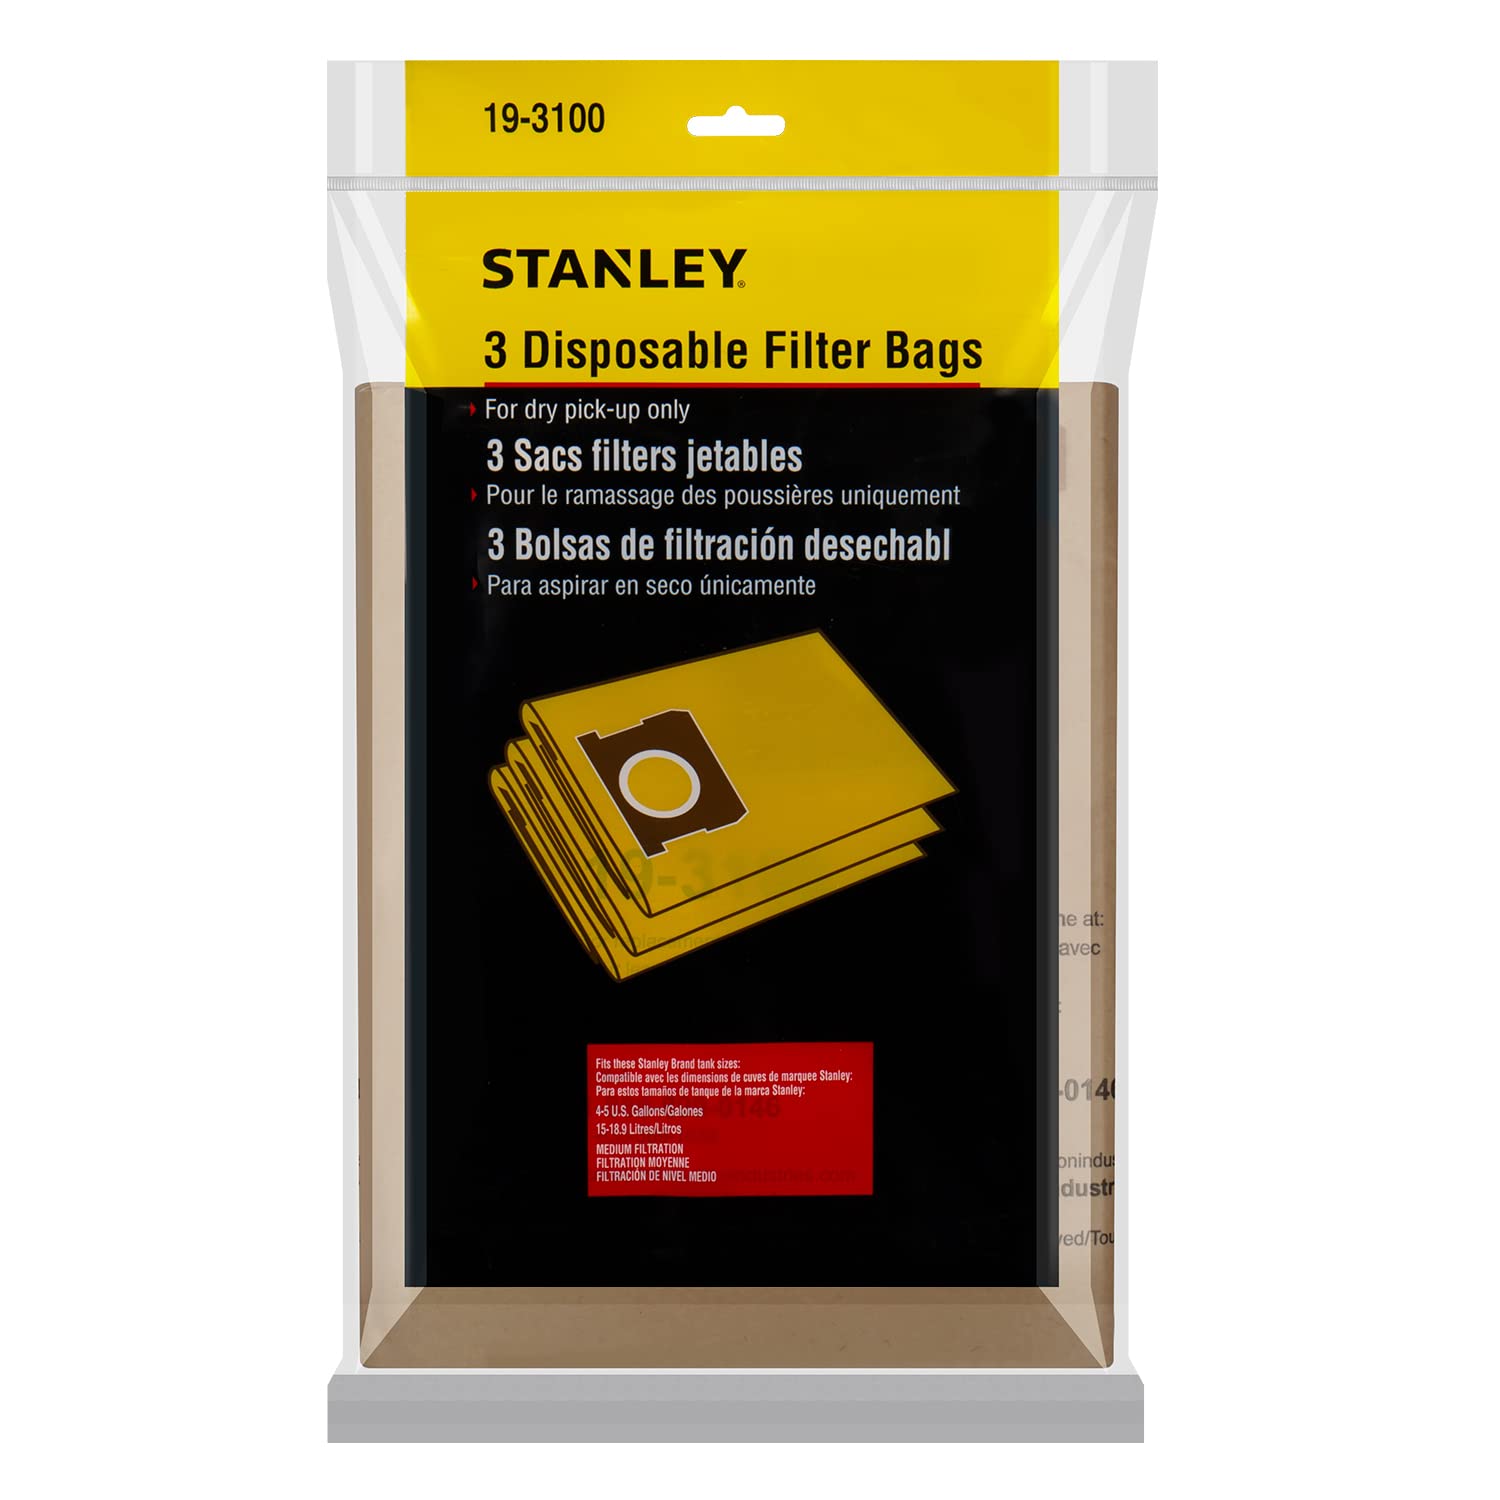 alton enterprises limited Stanley 19-3100 5-8 Gallon Disposable Filter Bag for Wet/Dry Vacuums, 3-Pack